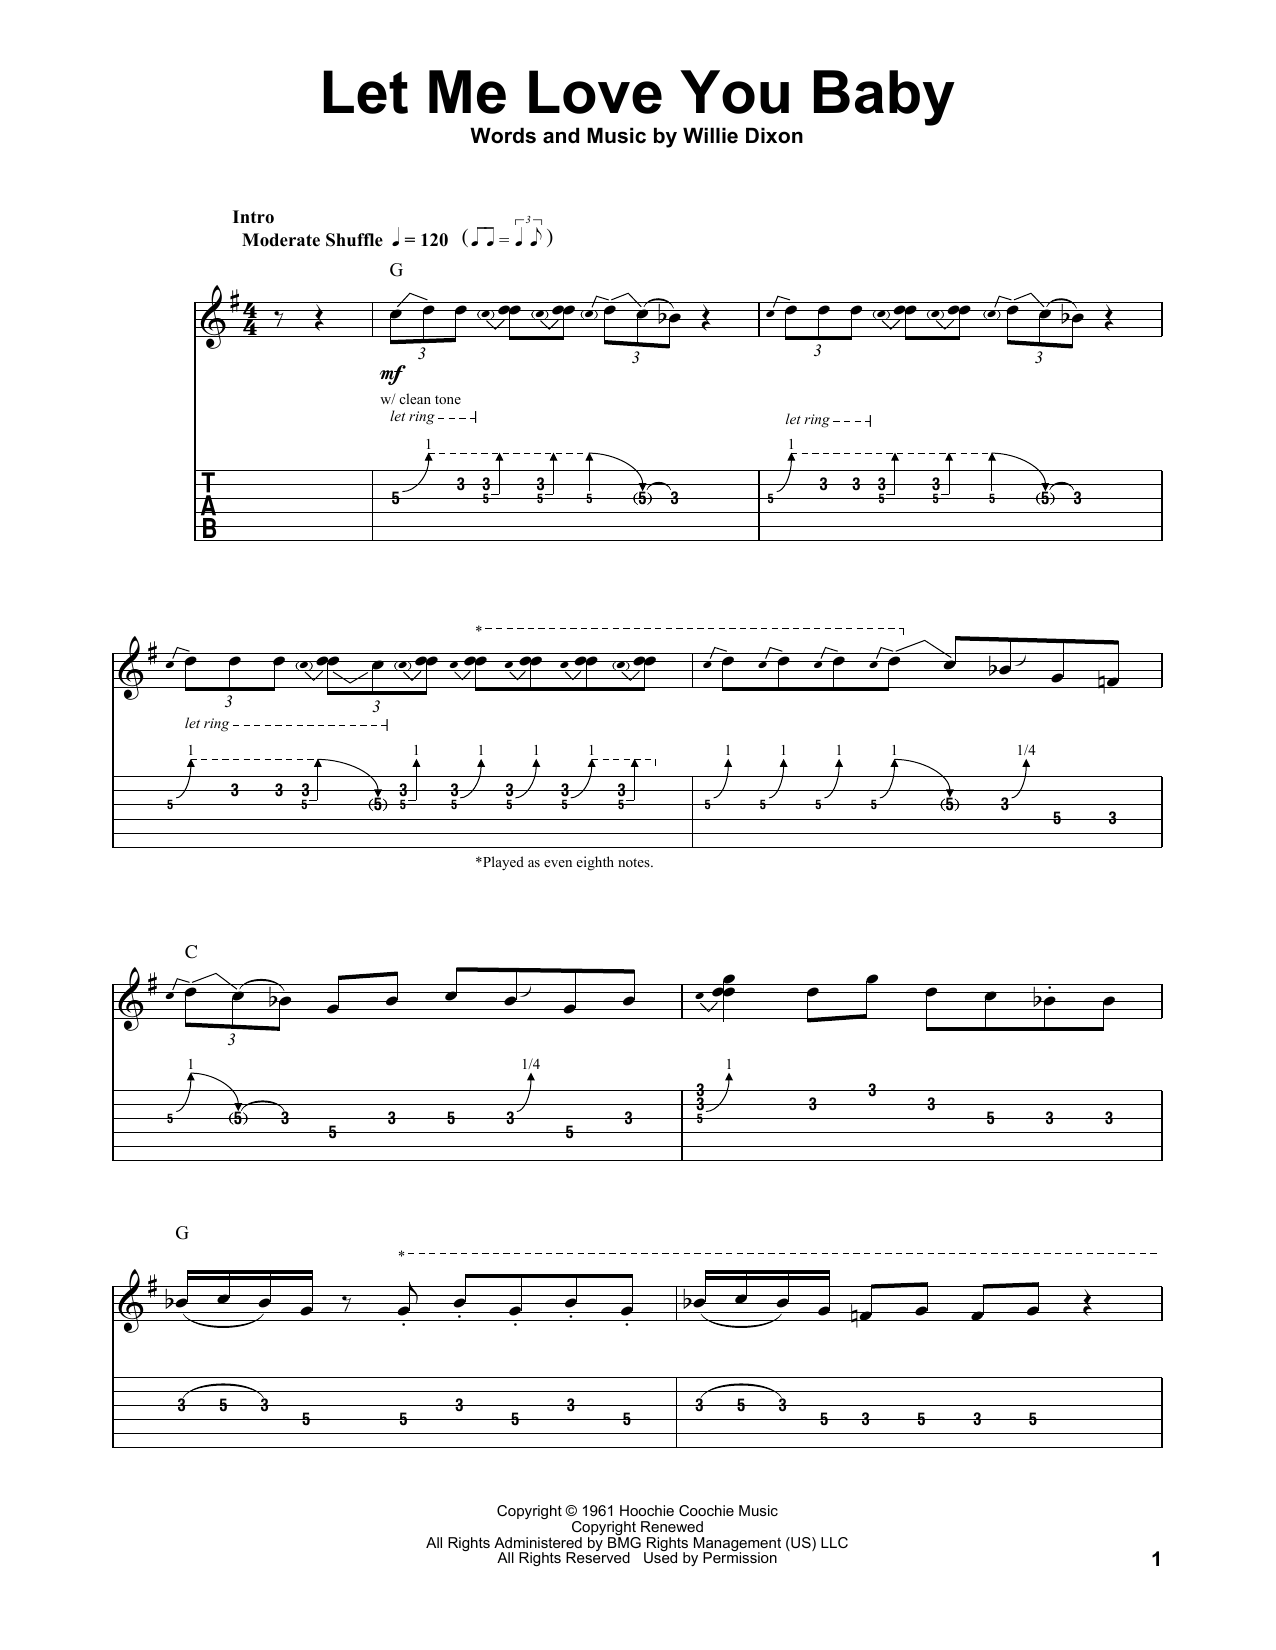 Buddy Guy Let Me Love You Baby Sheet Music Pdf Notes Chords Blues Score Guitar Tab Single Guitar Download Printable Sku